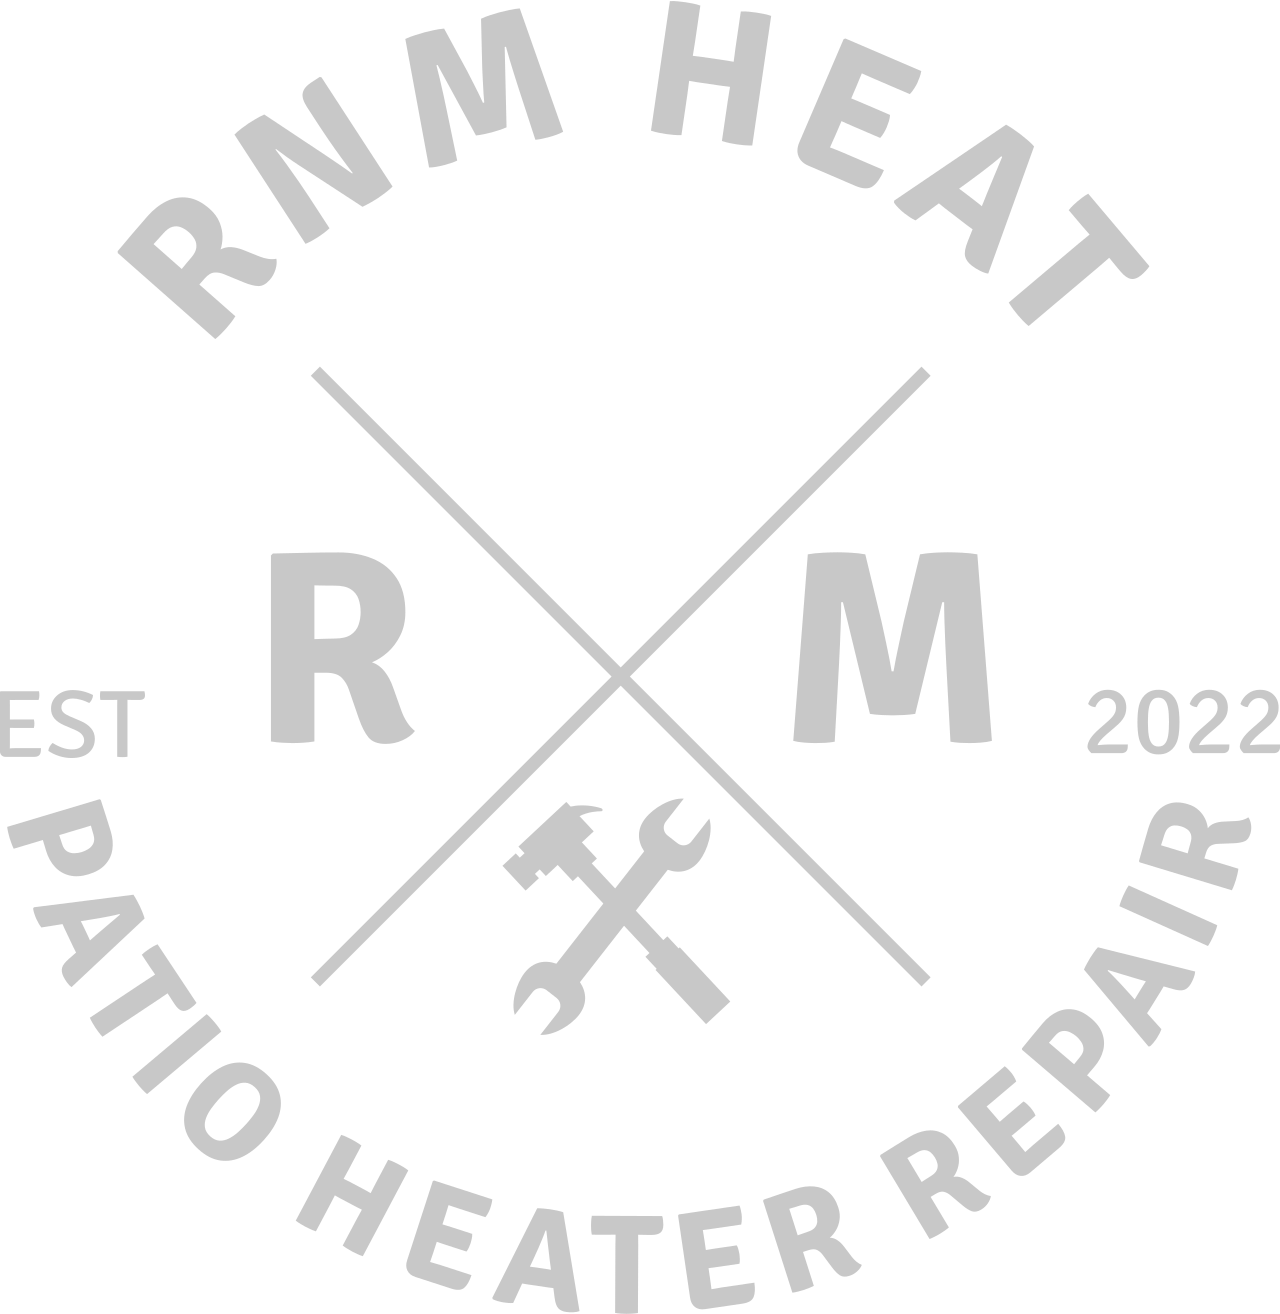 RNM HEAT patio heater repair's web page